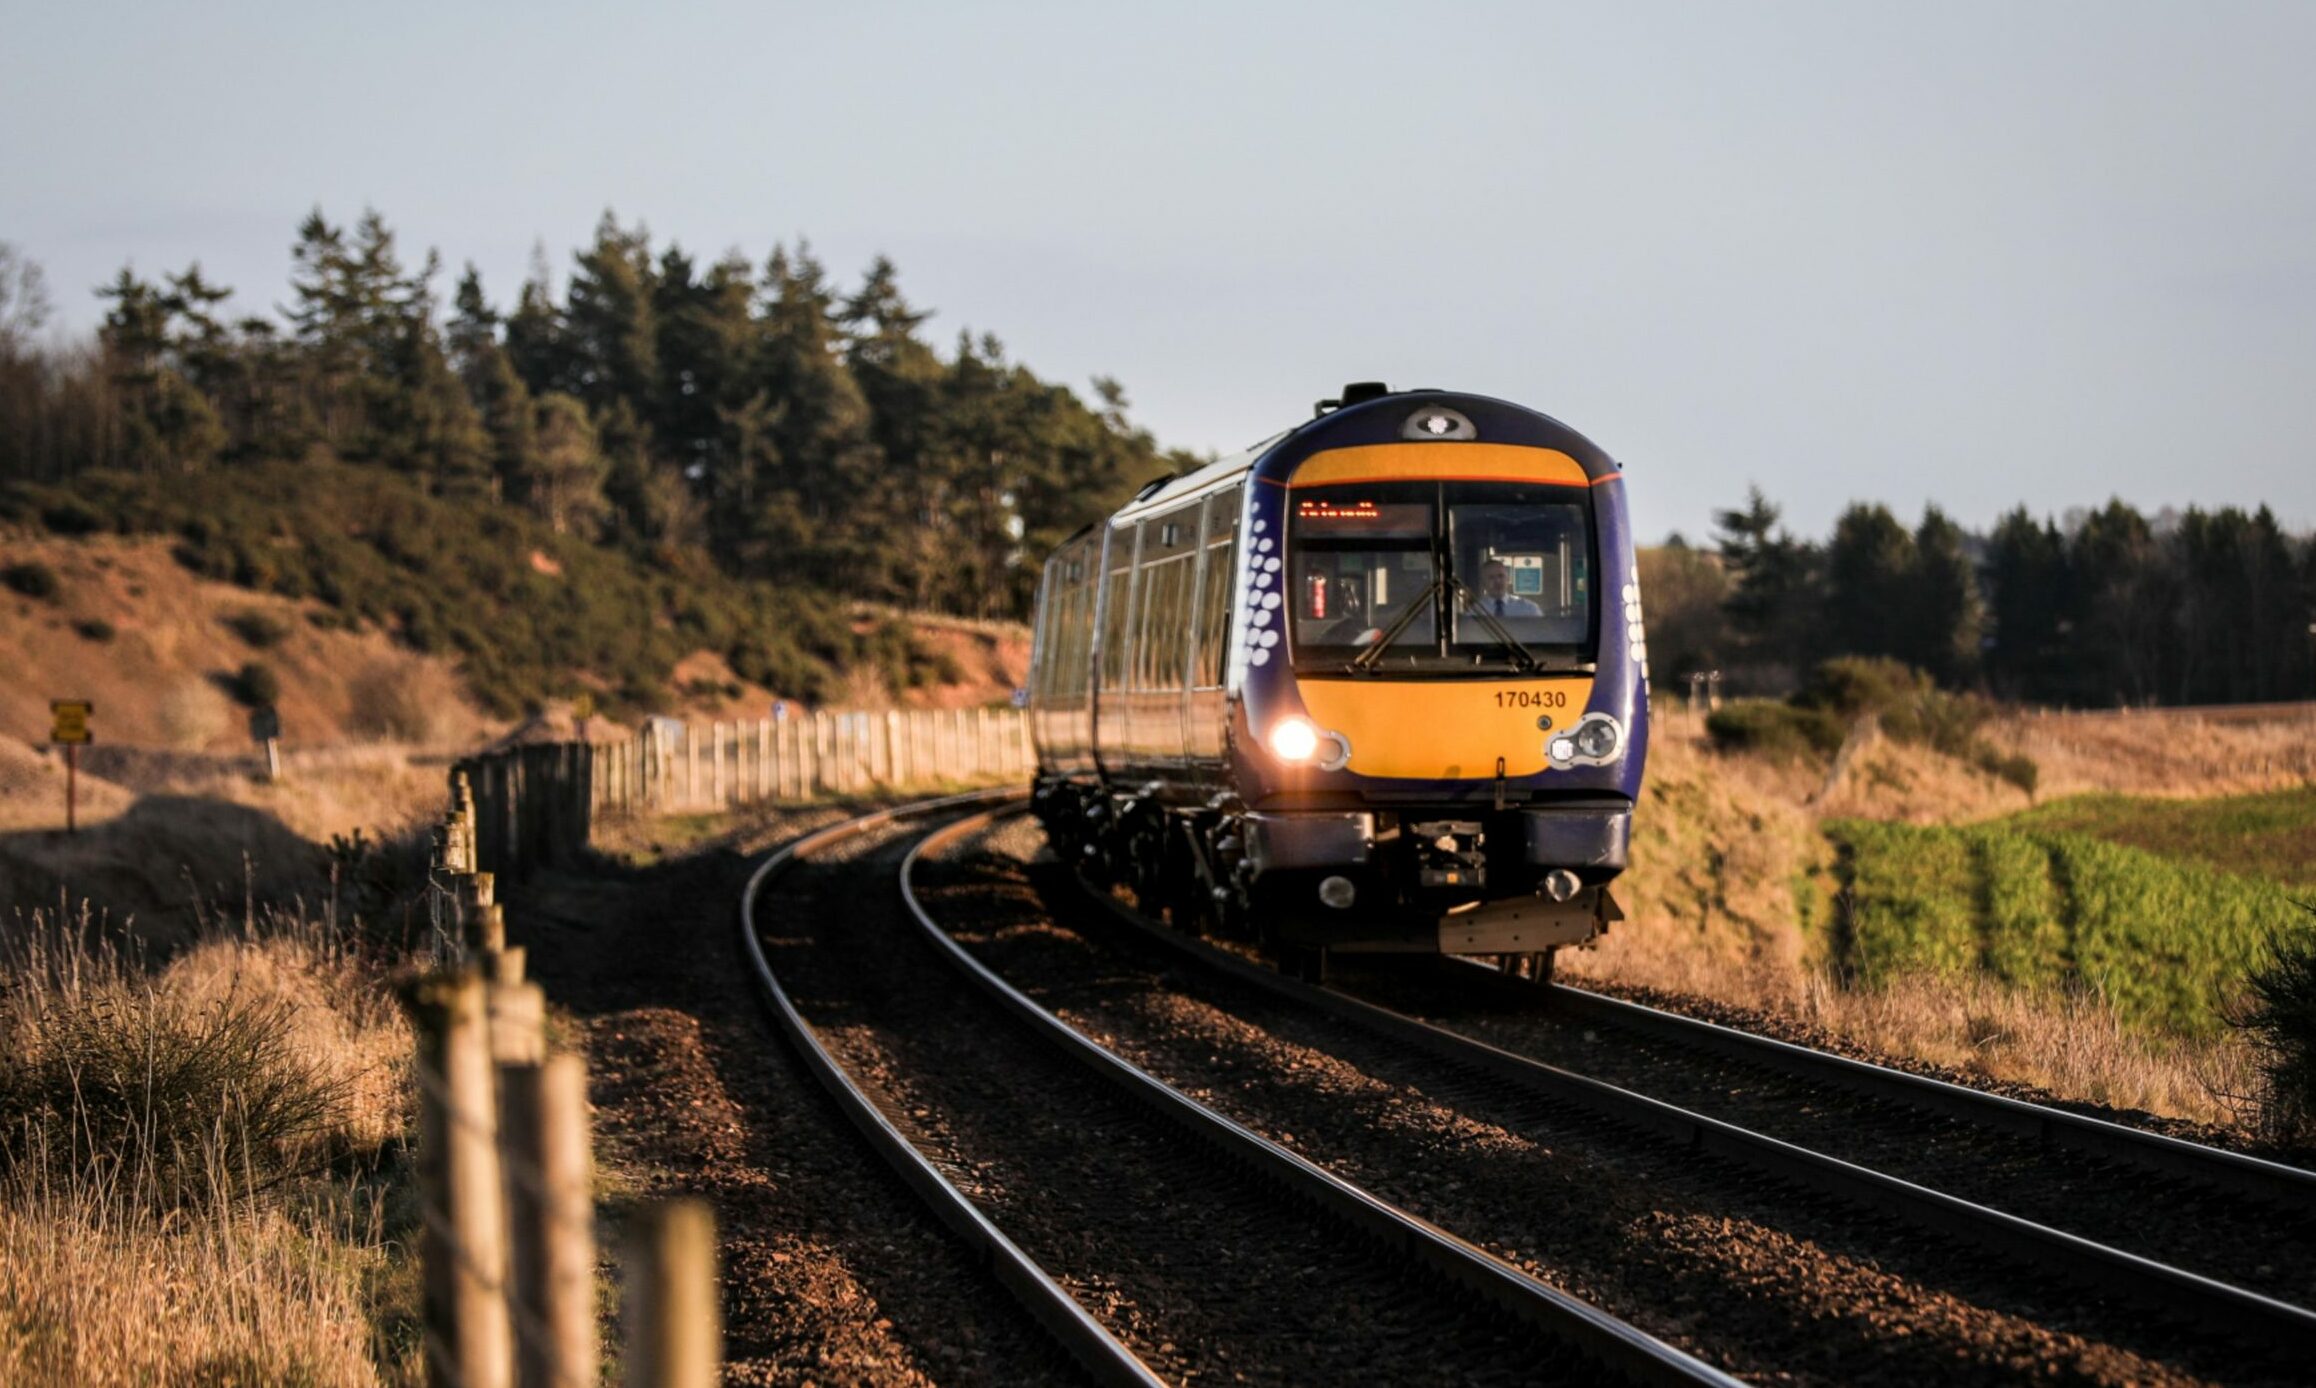 ScotRail trains between Edinburgh and Fife